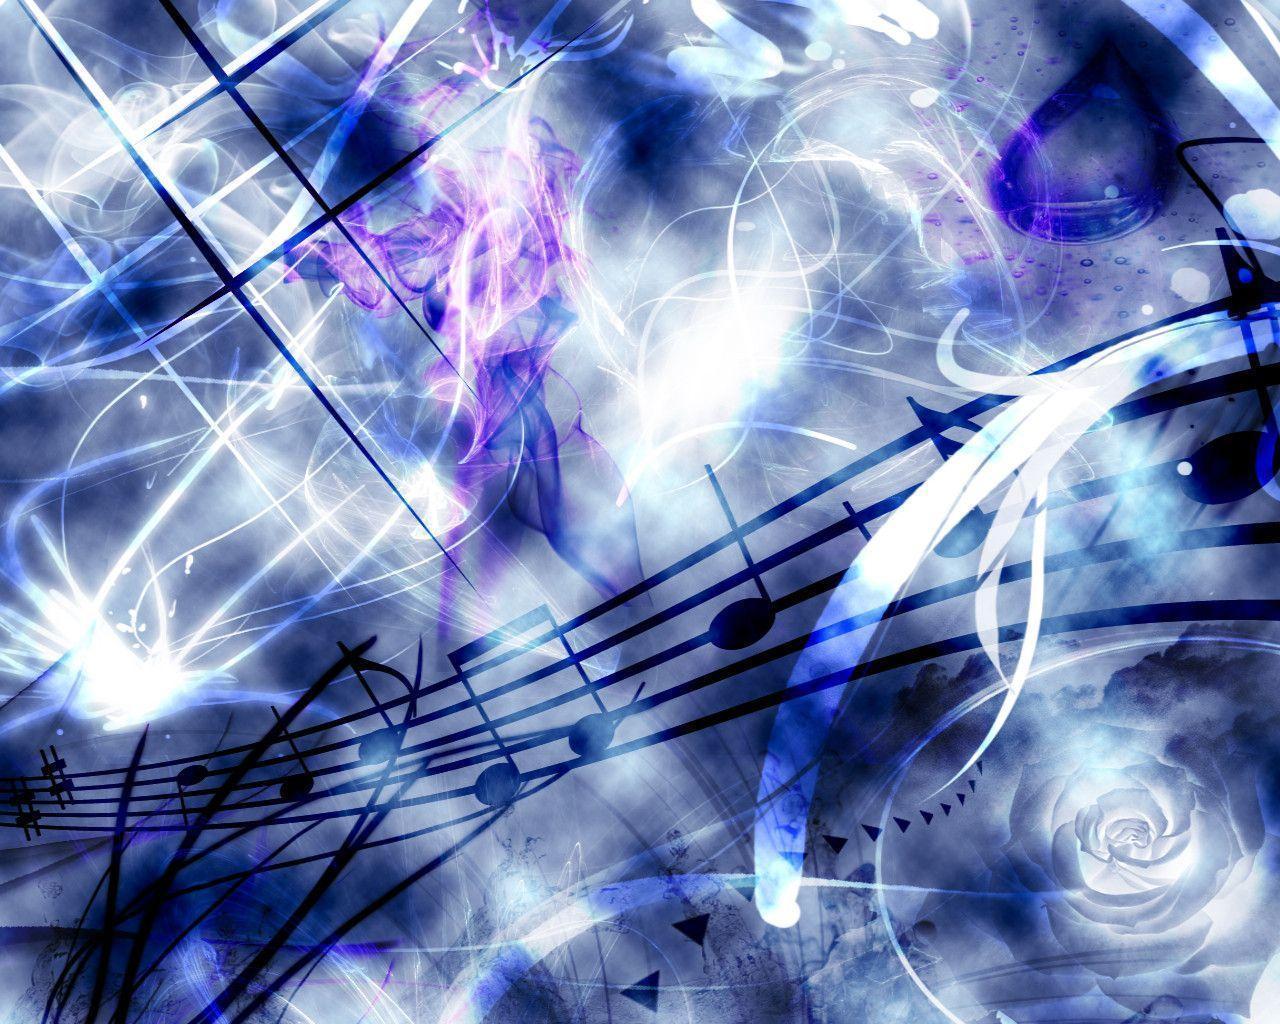 Abstract Music HD Background 9 HD Wallpaper. lzamgs